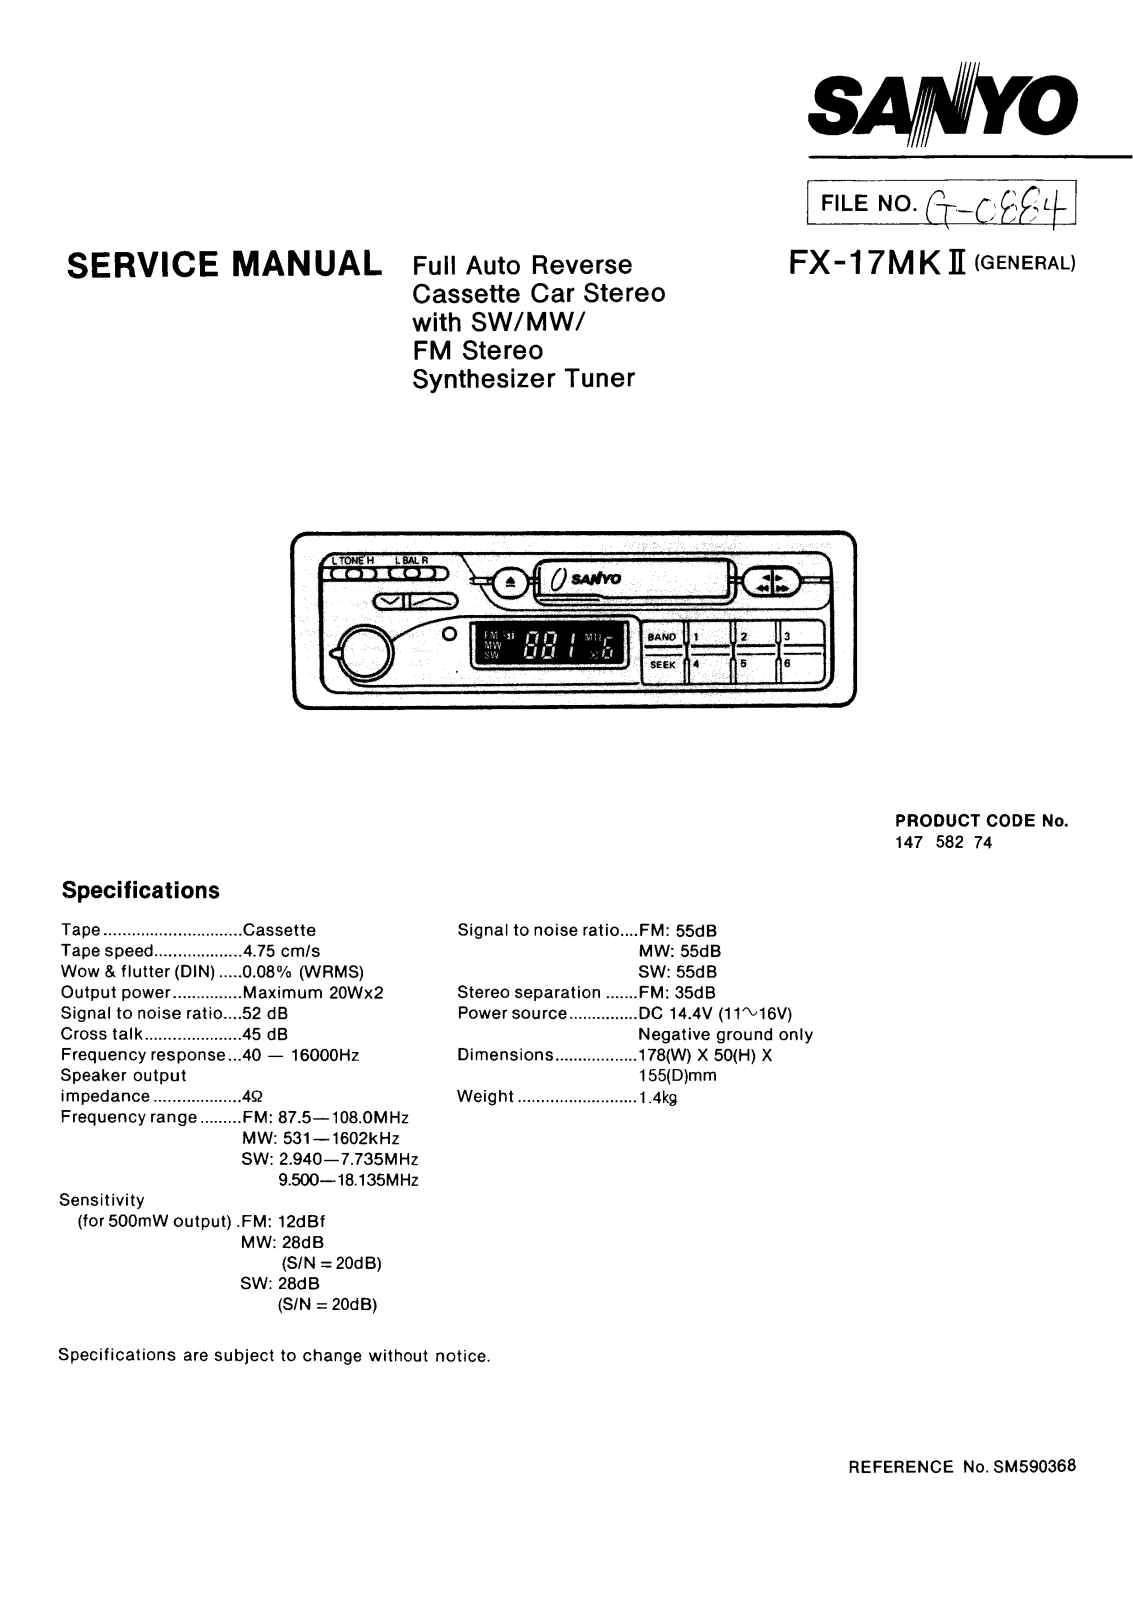 Sanyo FX-17MKII Service Manual